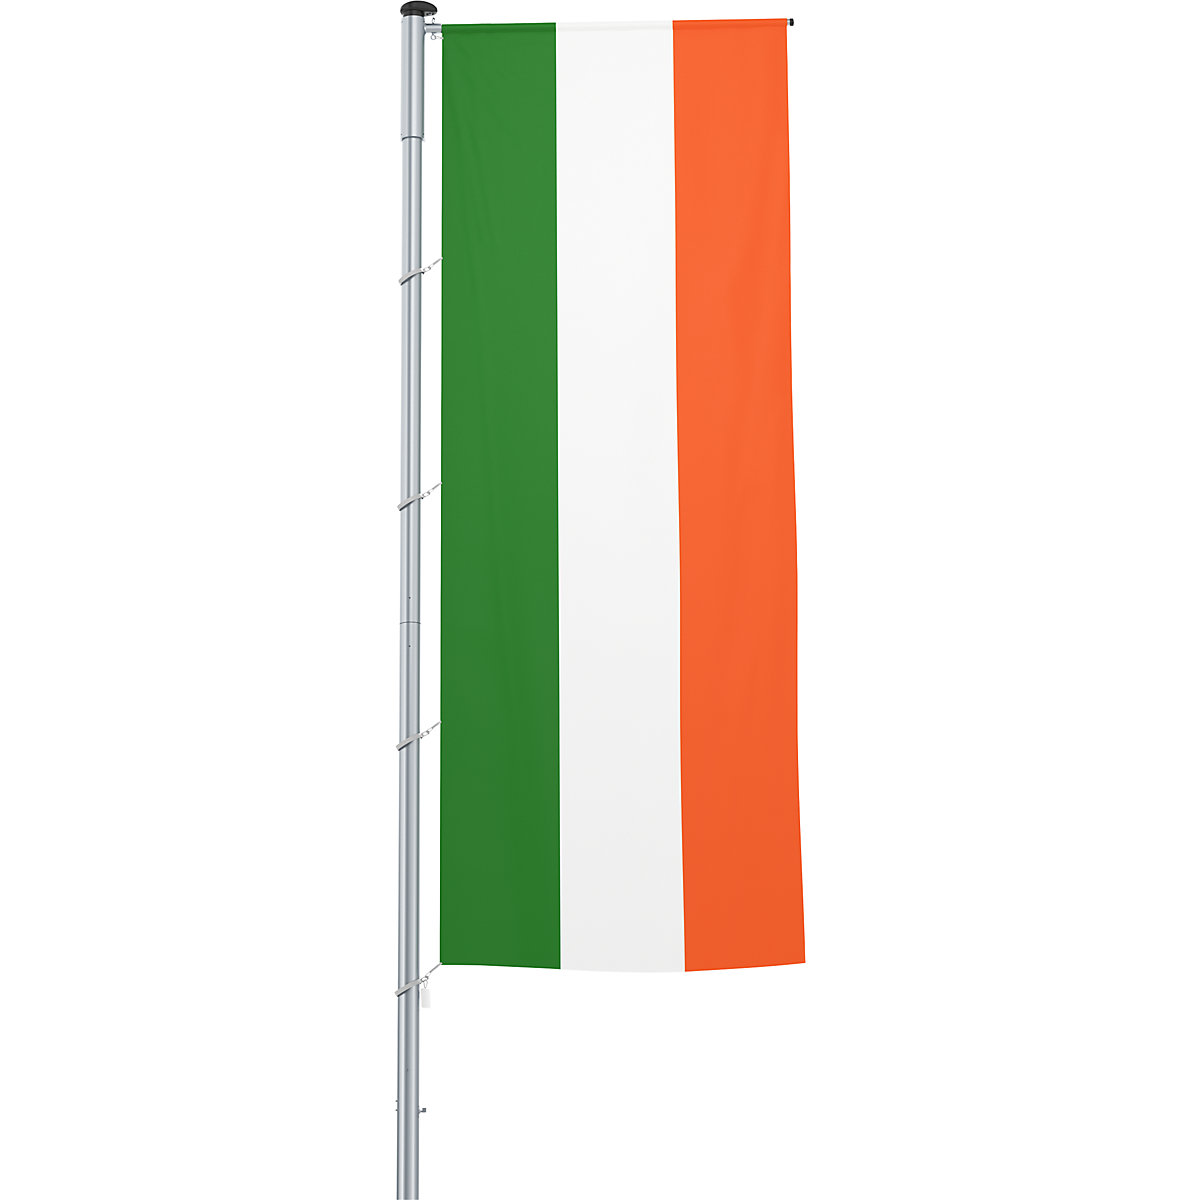 Mannus – Bandera con pluma/bandera del país, formato 1,2 x 3 m, Irlanda